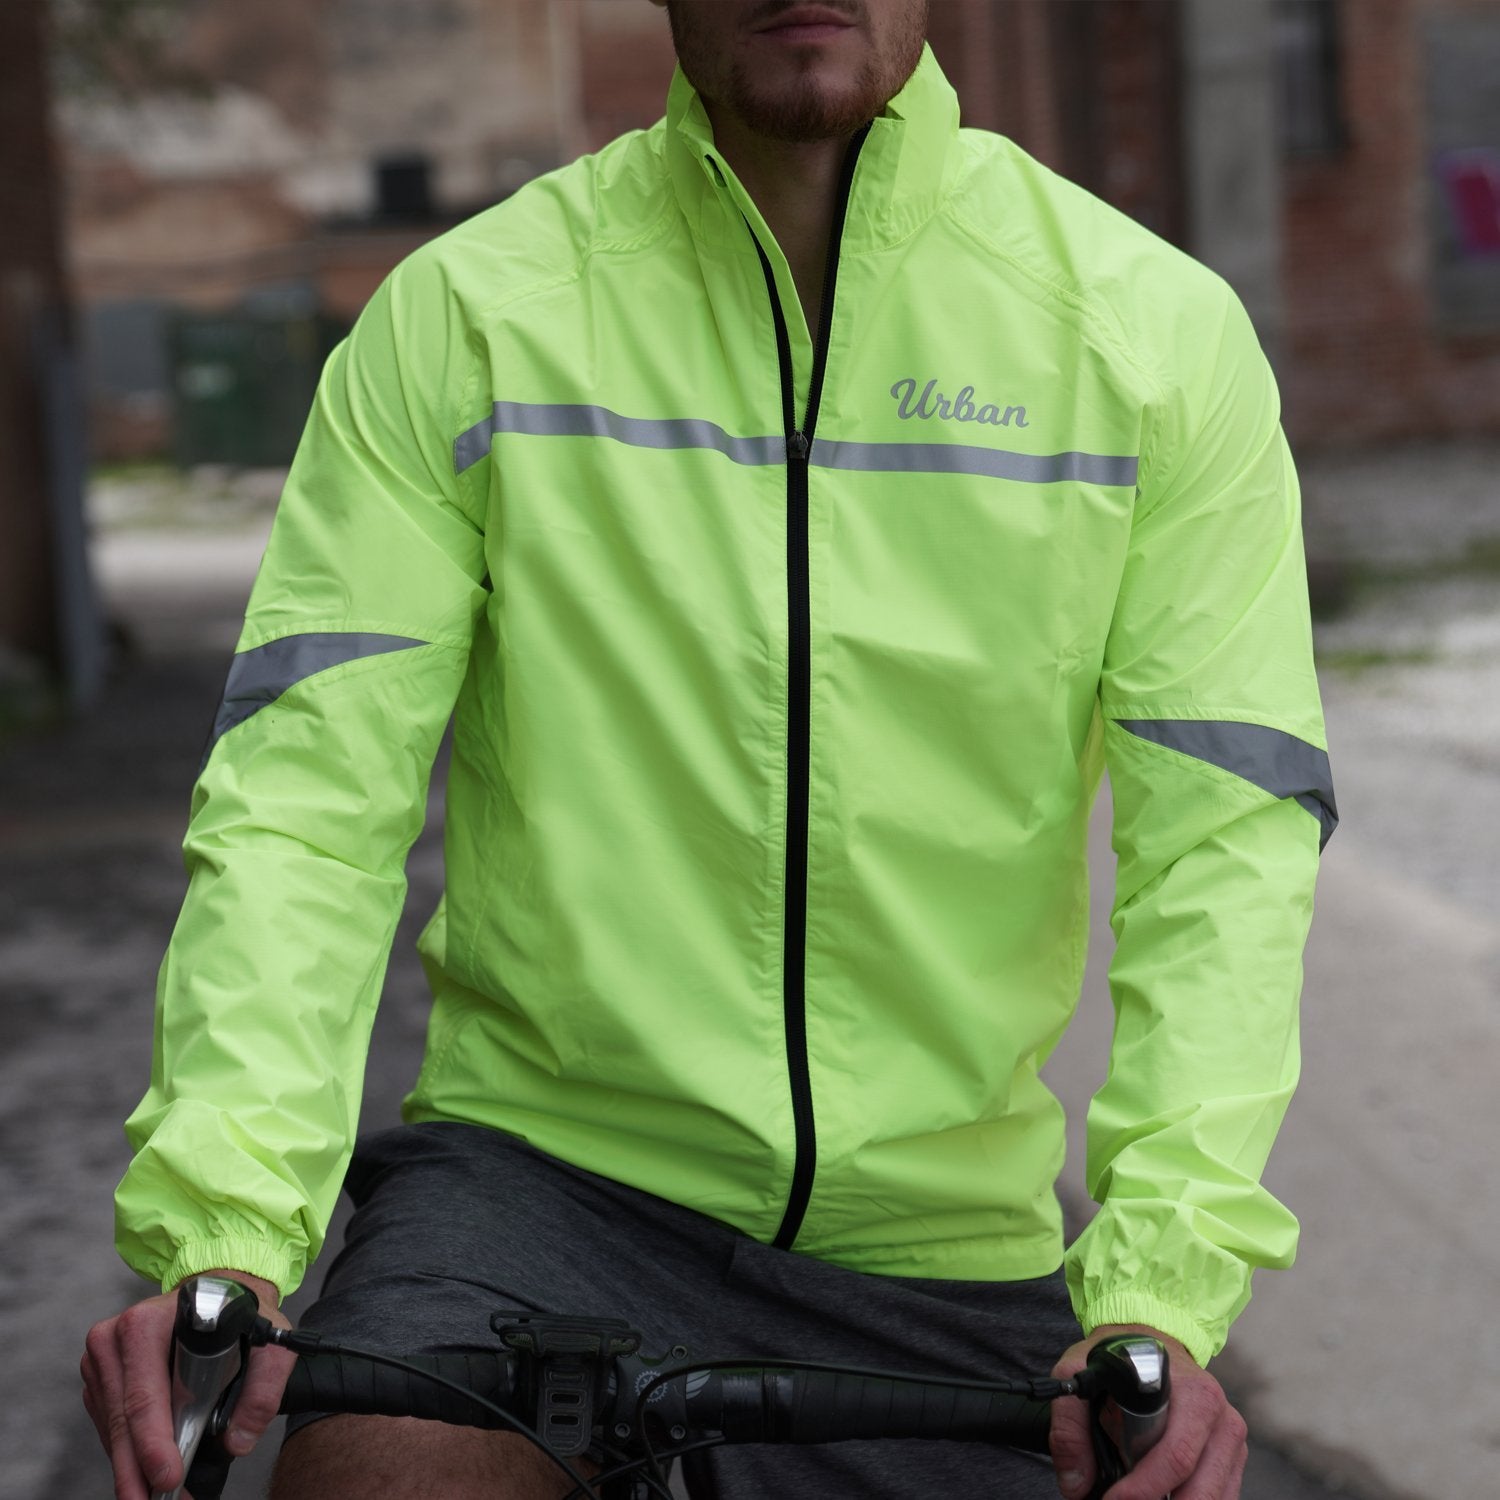 Urban Windproof & Waterproof Commuters Cycling Jacket - Yellow